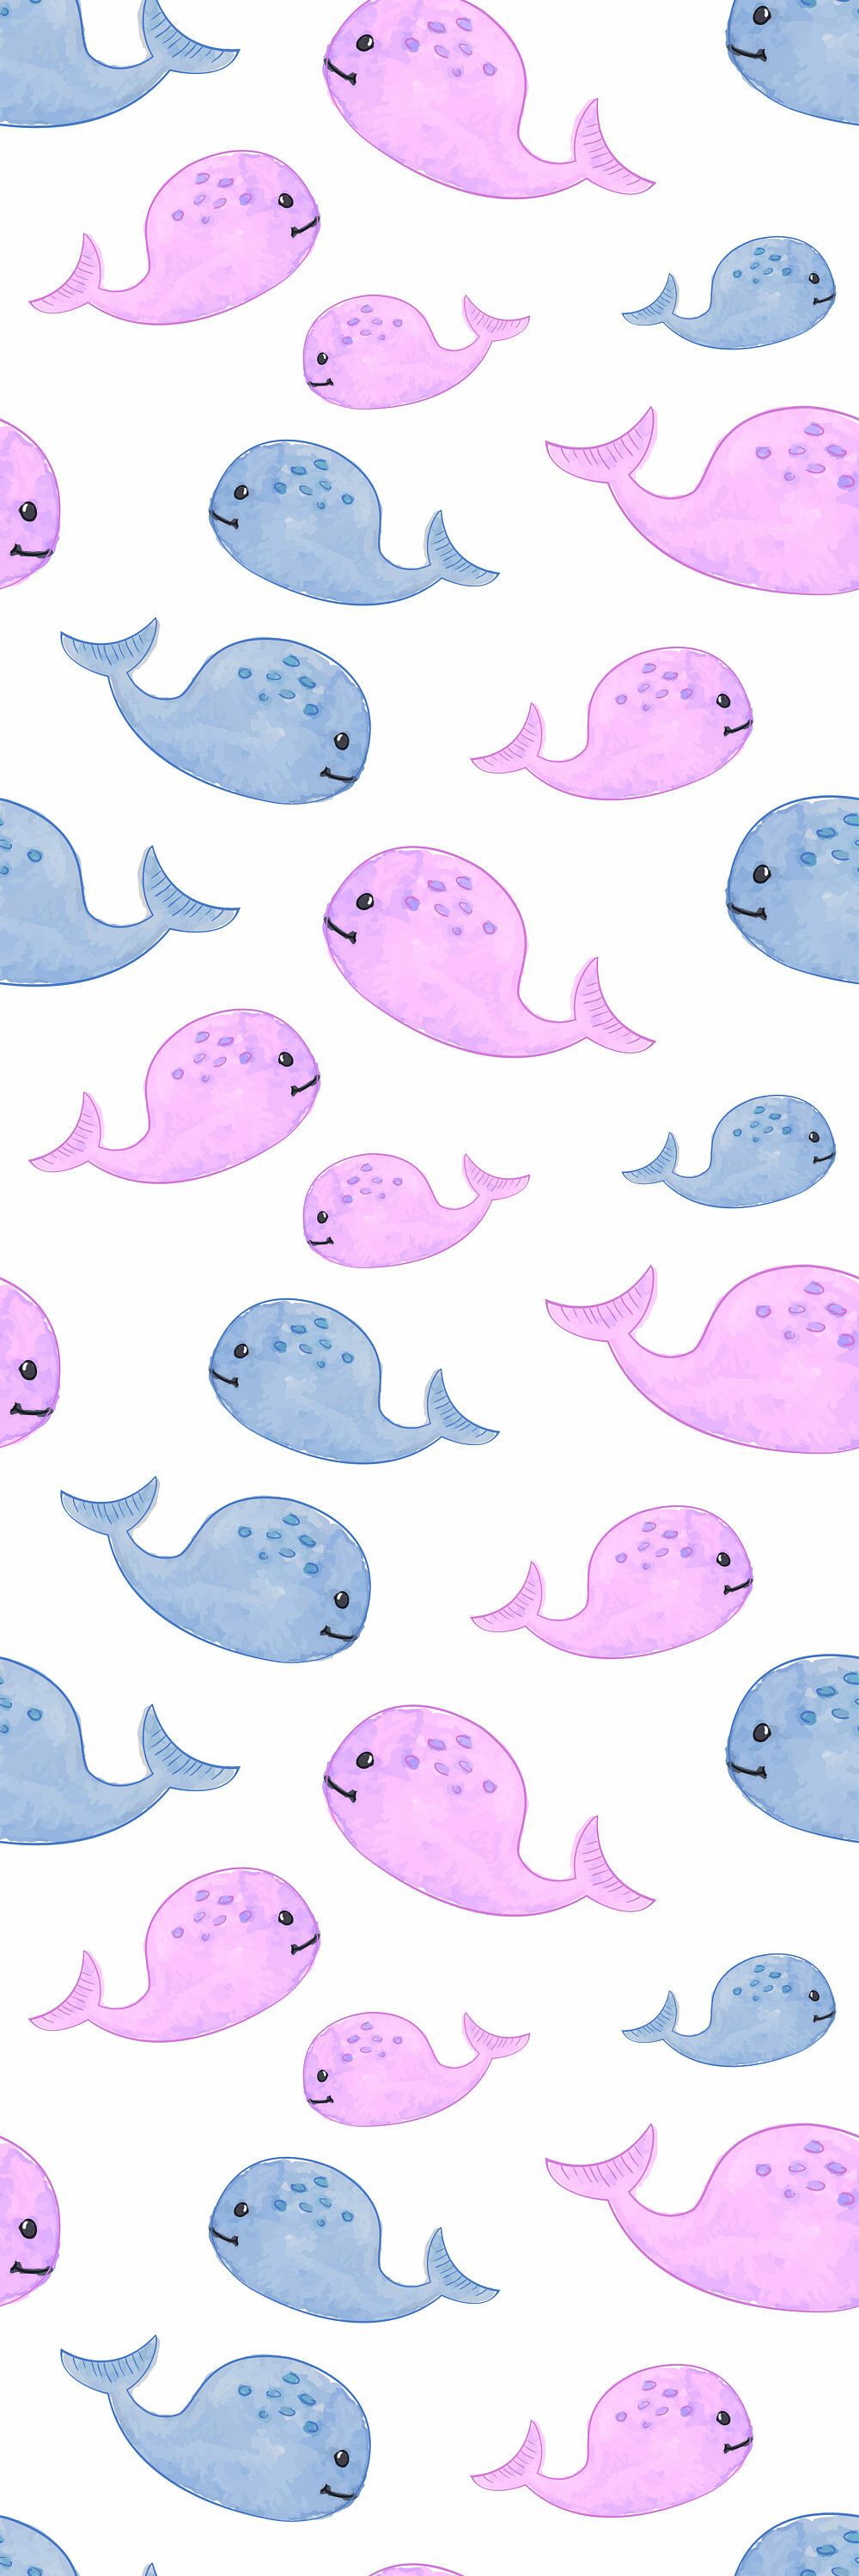 Cute Whale Wallpaper Free Cute Whale Background